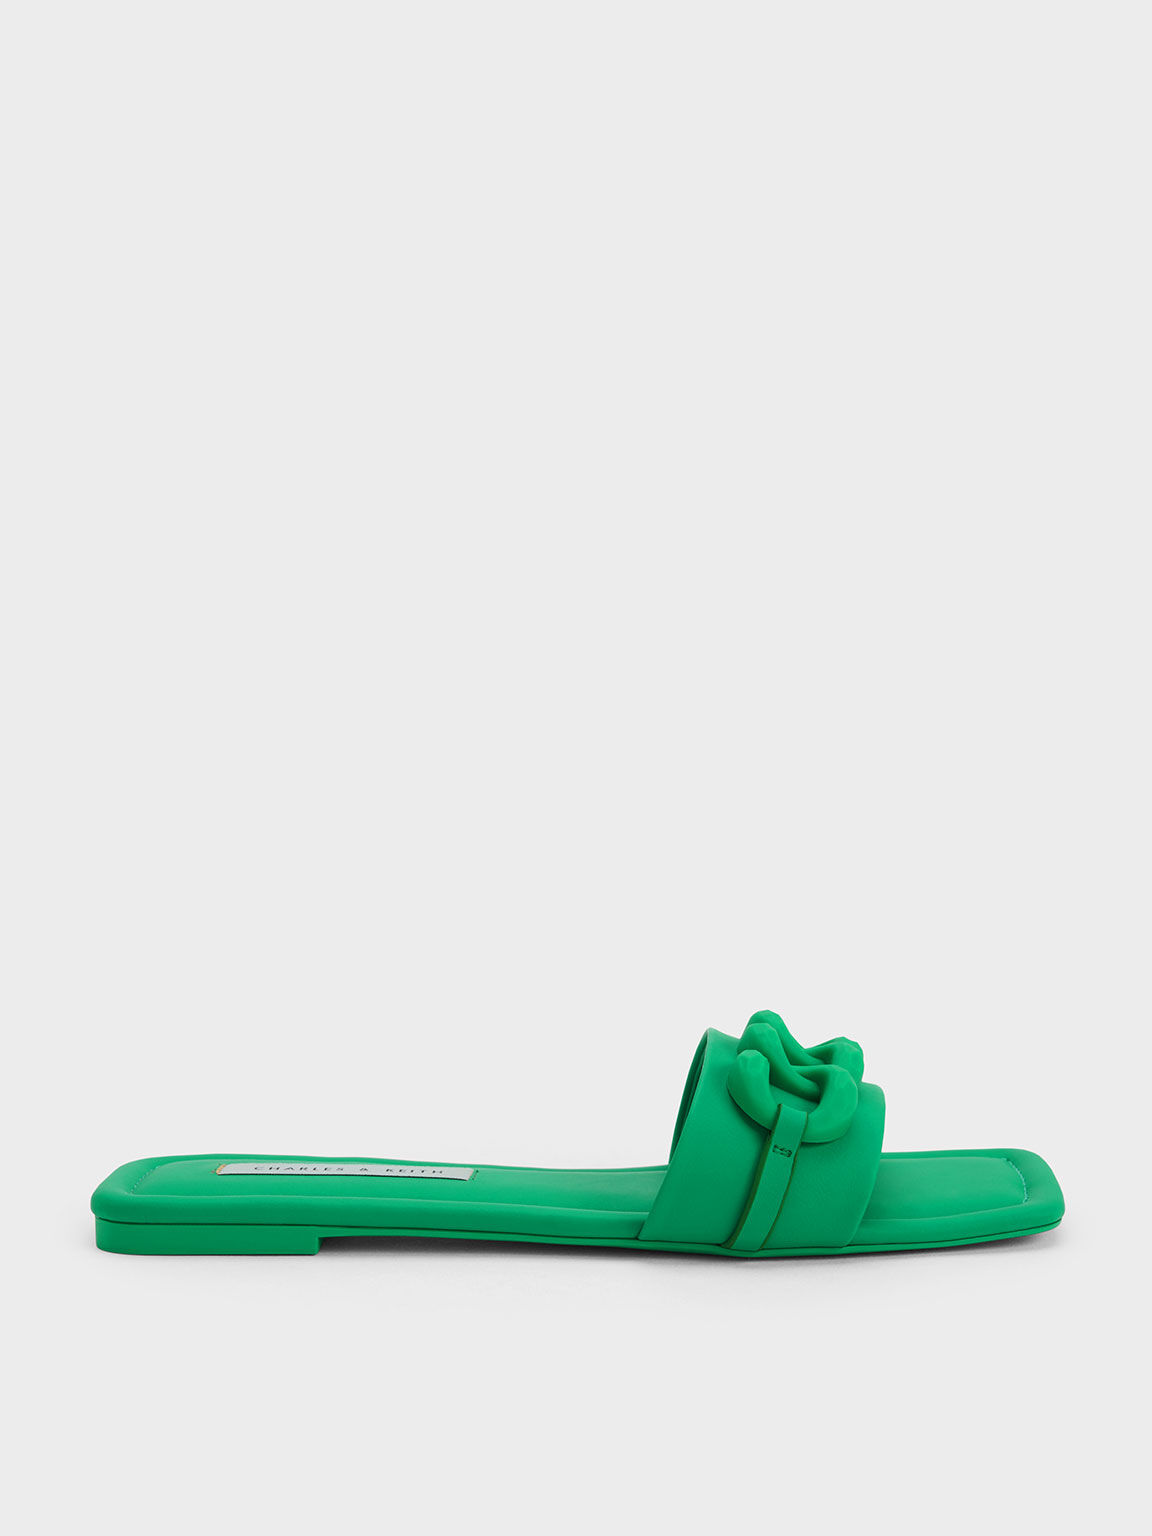 Green Sandal Slide Chunky Chain-Link, Green, hi-res